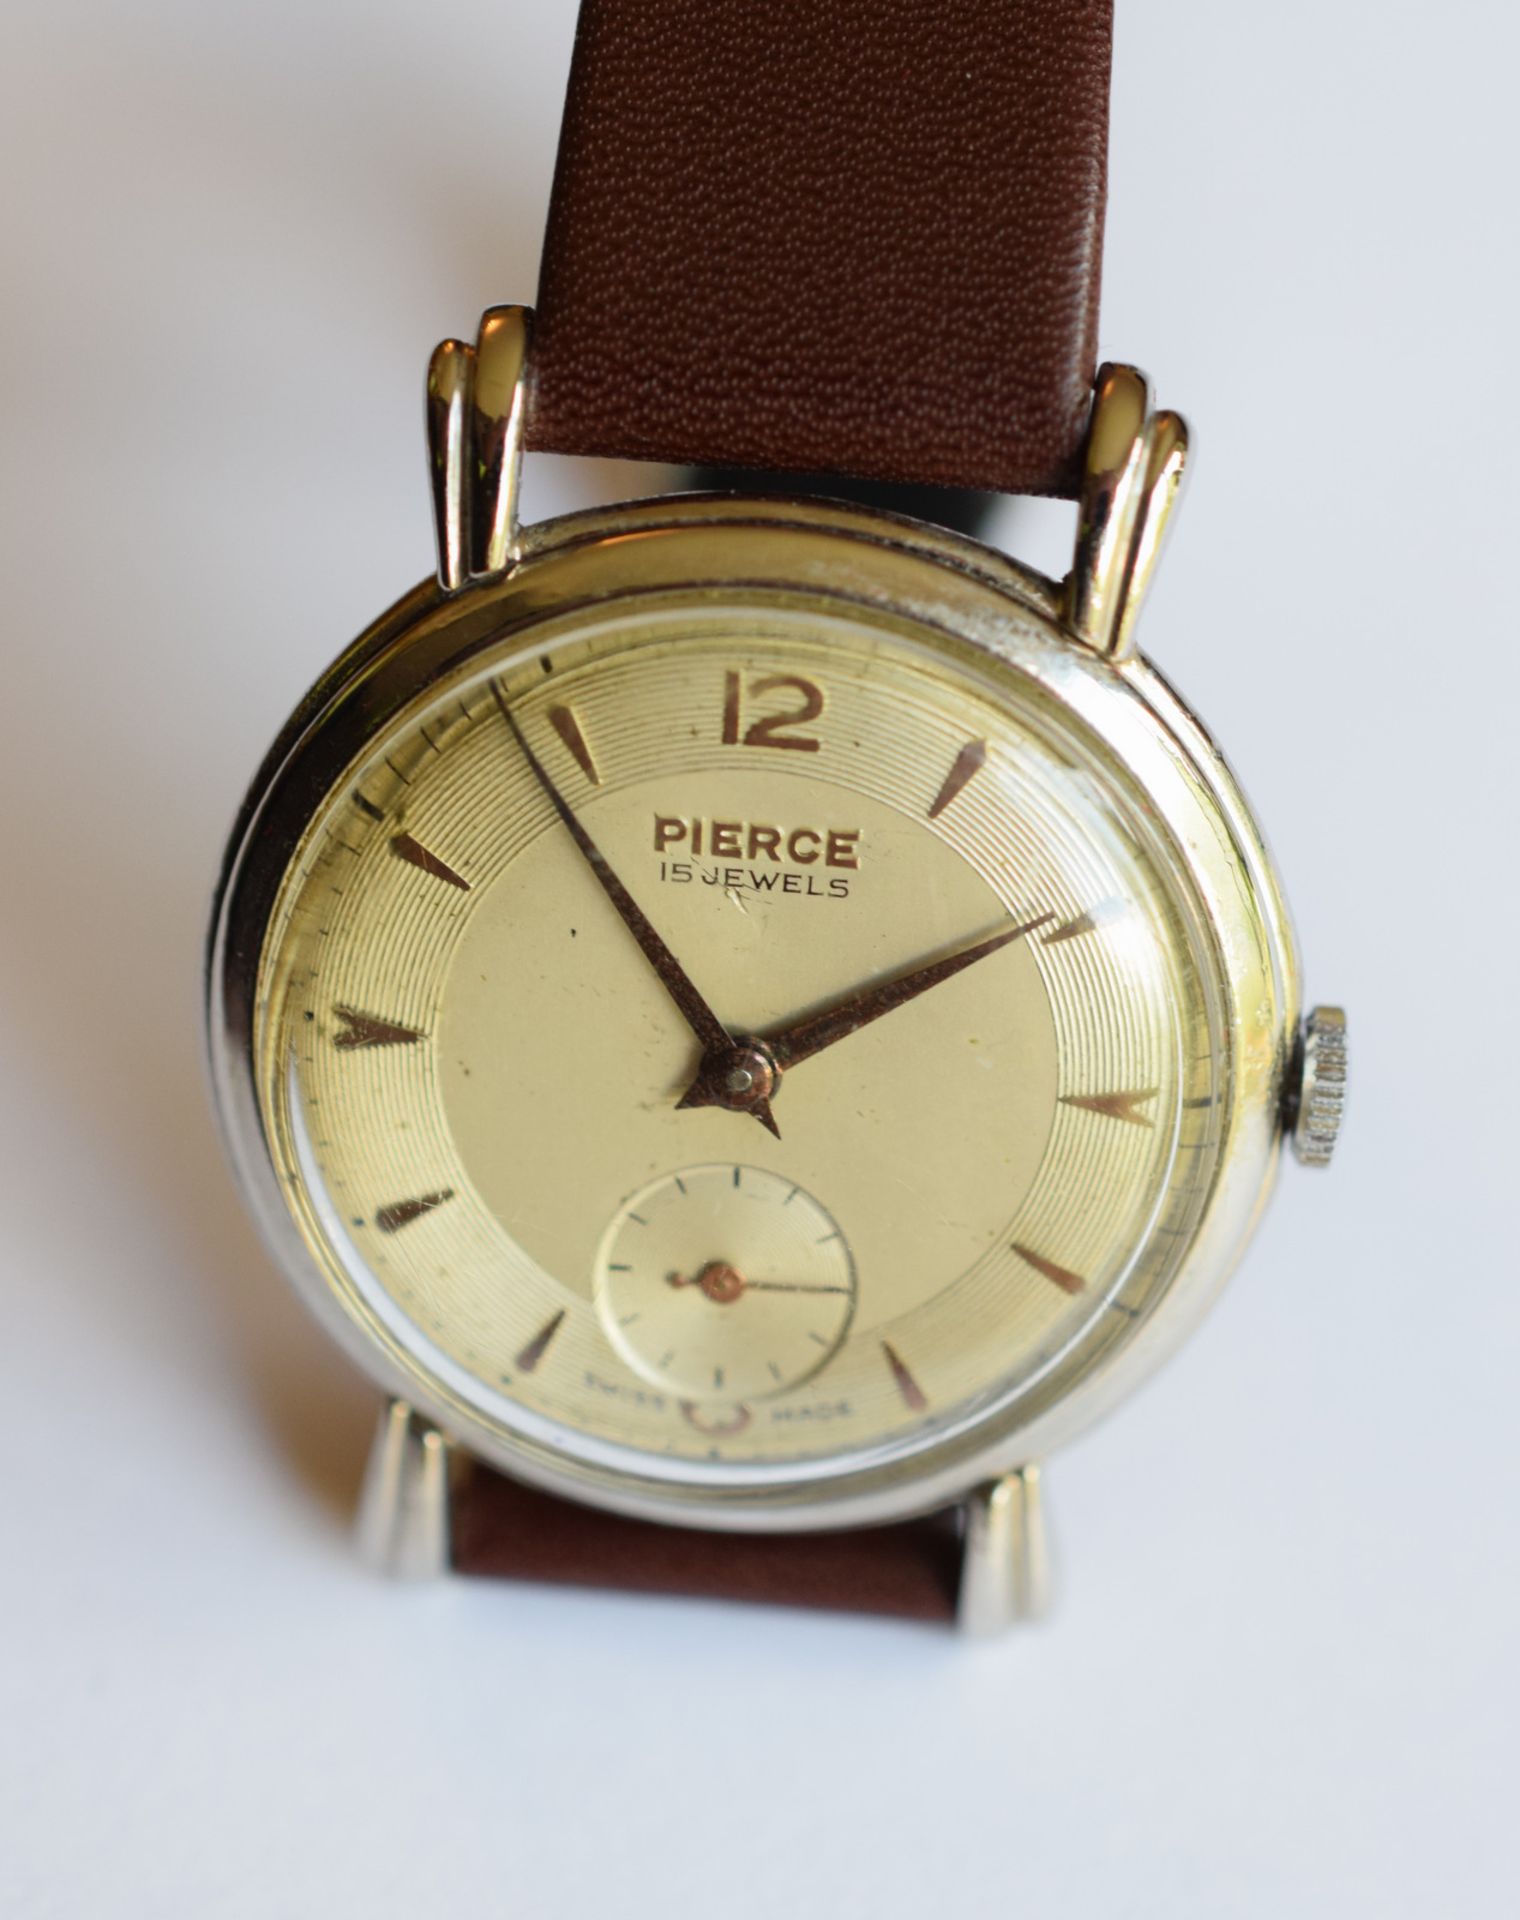 Pierce 15 Jewels Wristwatch - Image 5 of 7